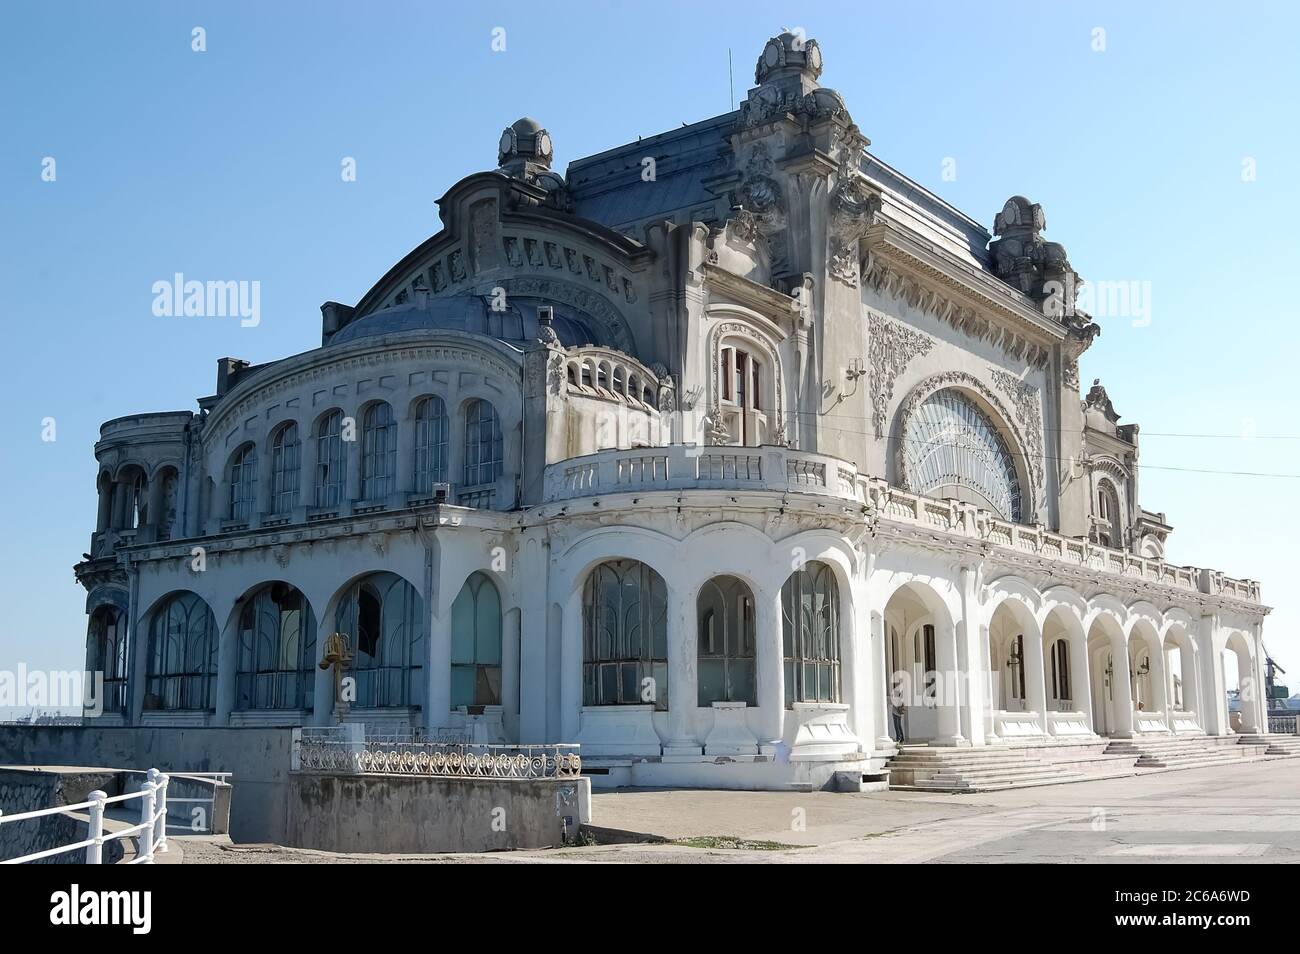 View of the old casino on the promenade in the city of Constanta on the Black Sea coast of Romania. Stock Photo